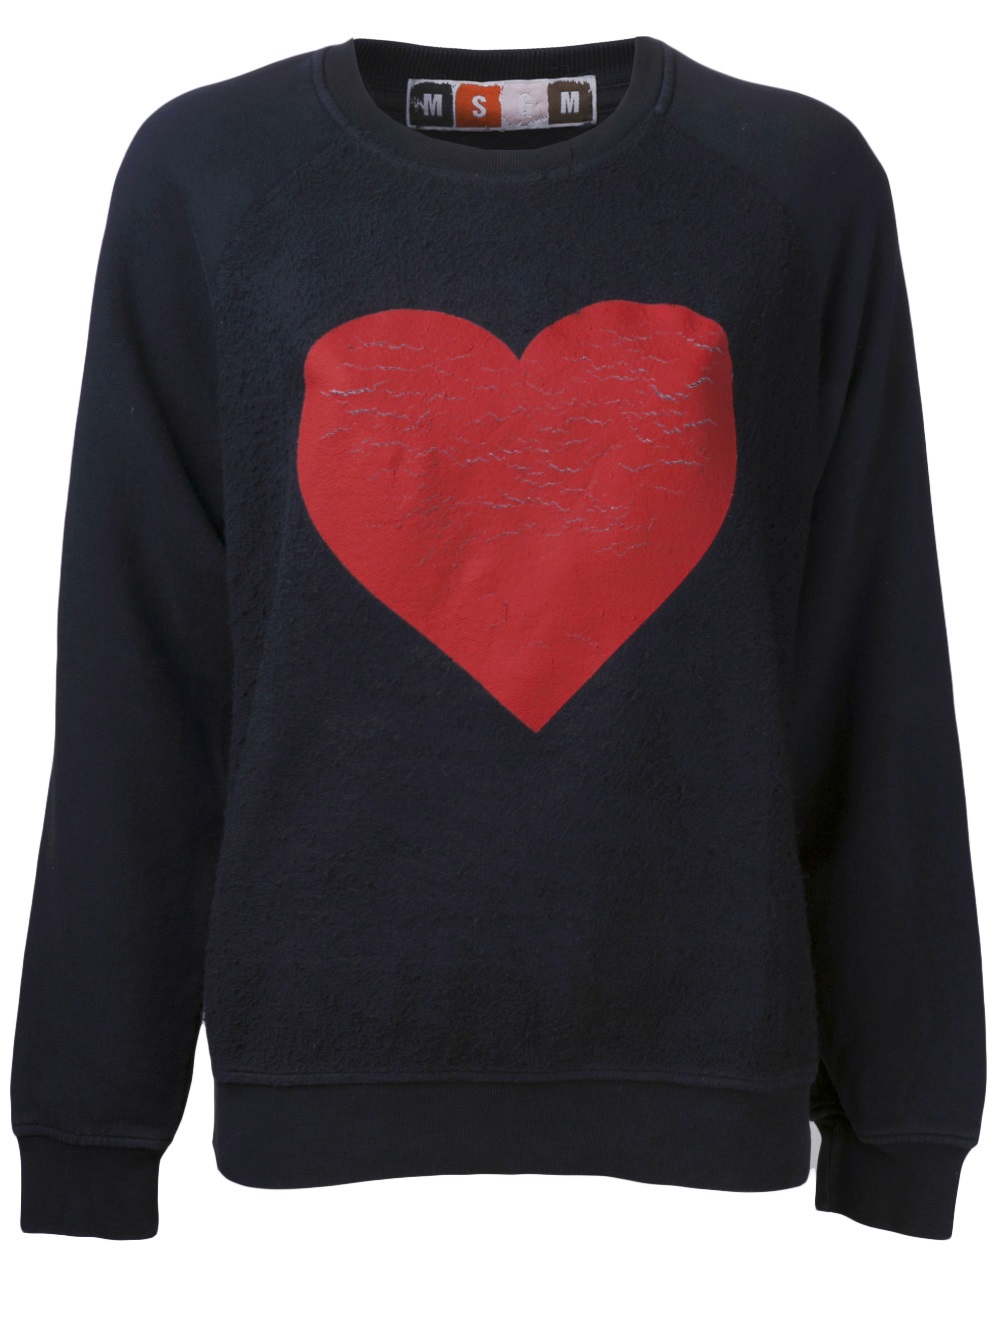 Lyst - Msgm Heart Print Sweatshirt in Blue